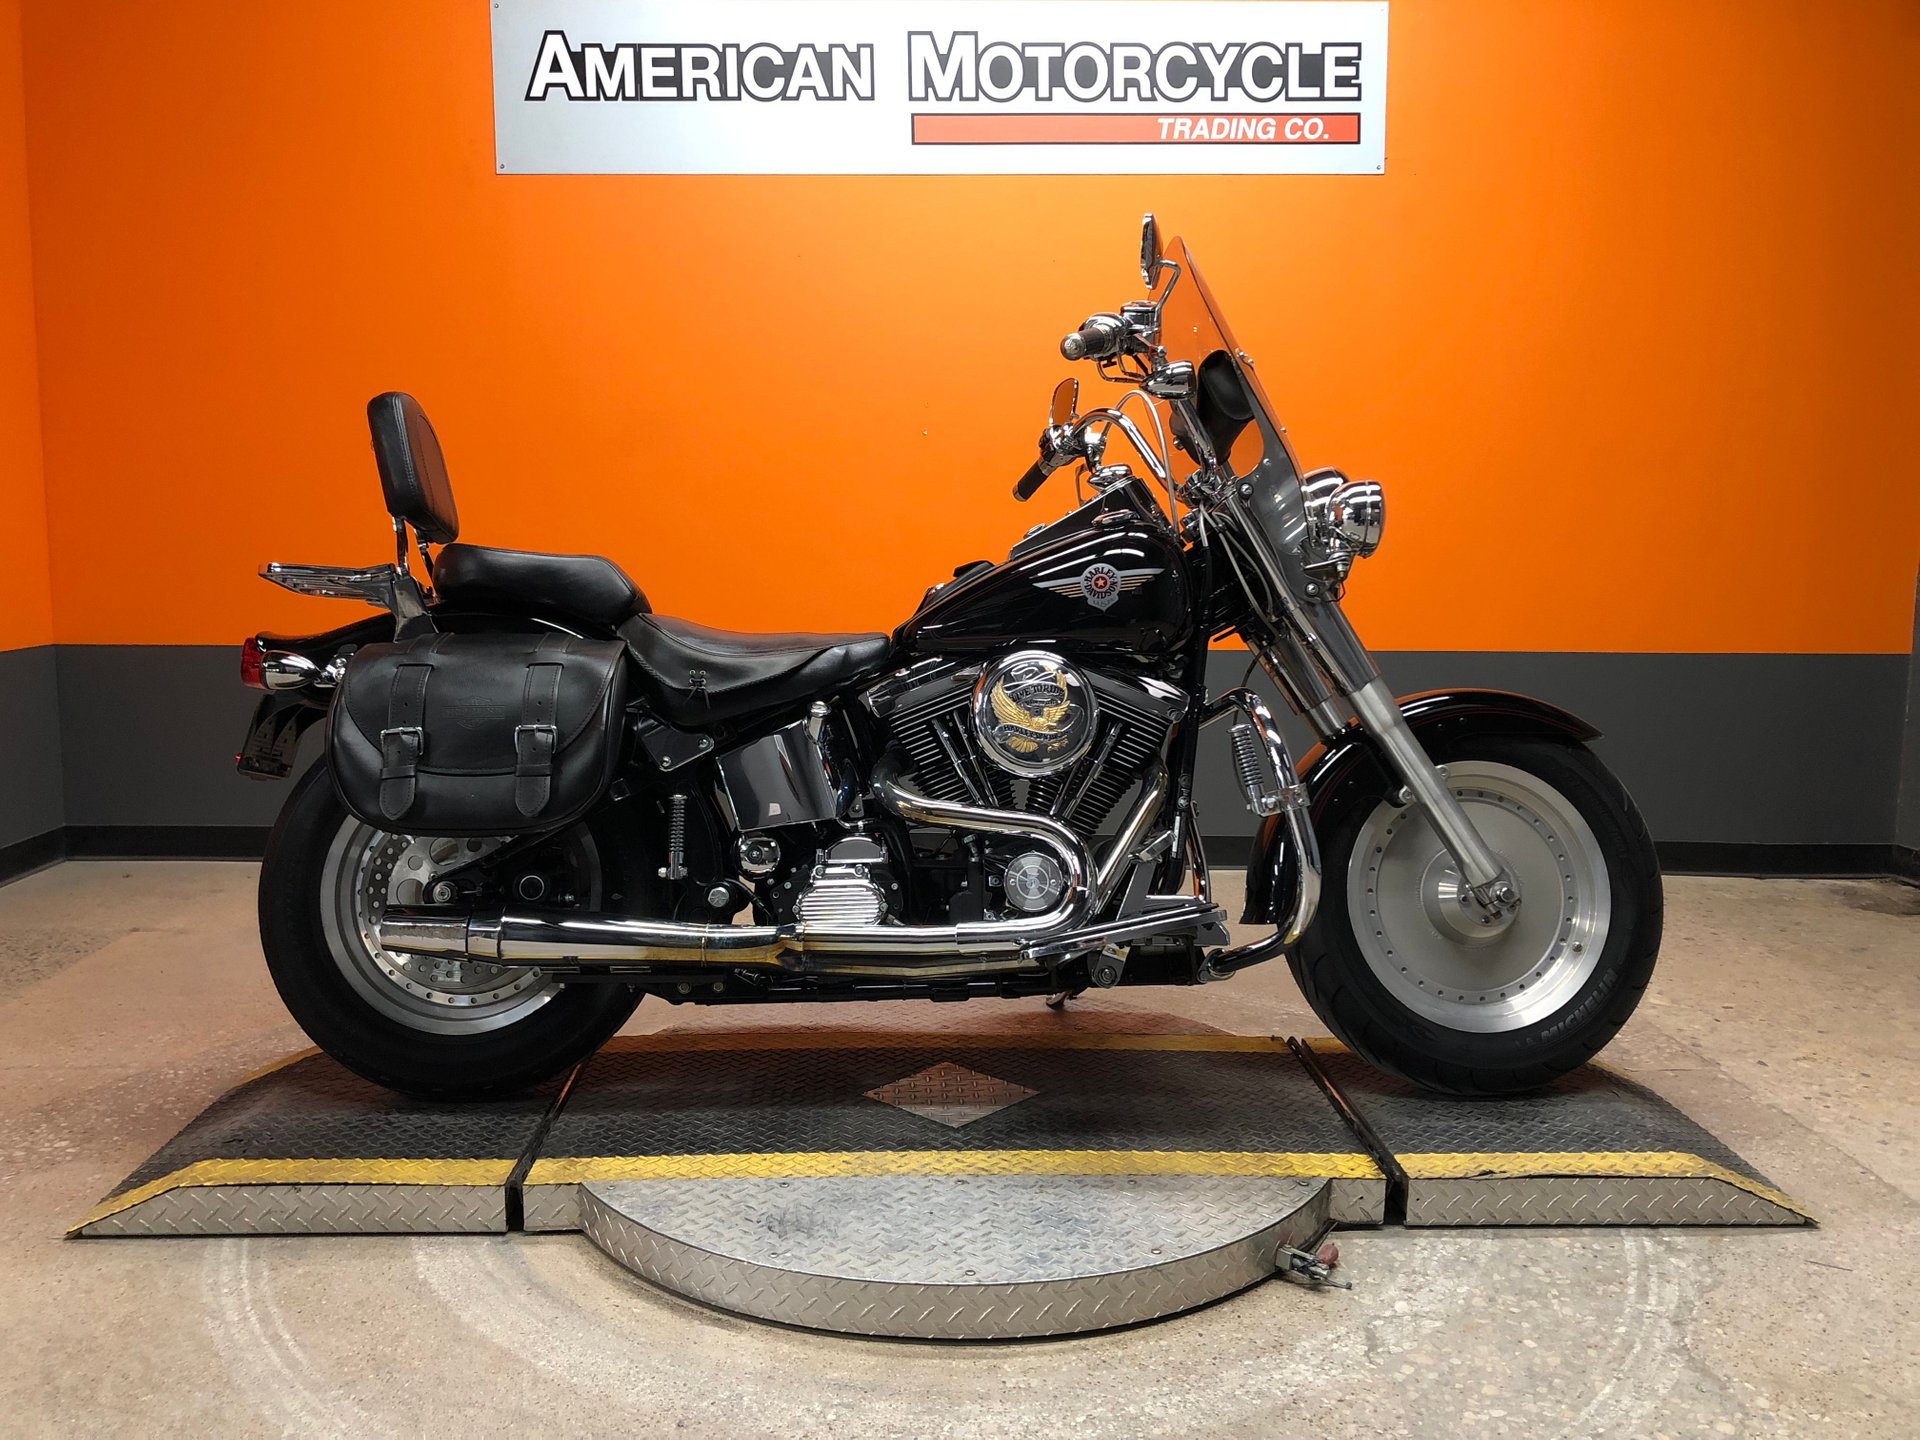 1999 Harley-Davidson Softail Fat Boy | American Motorcycle Trading Company  - Used Harley Davidson Motorcycles